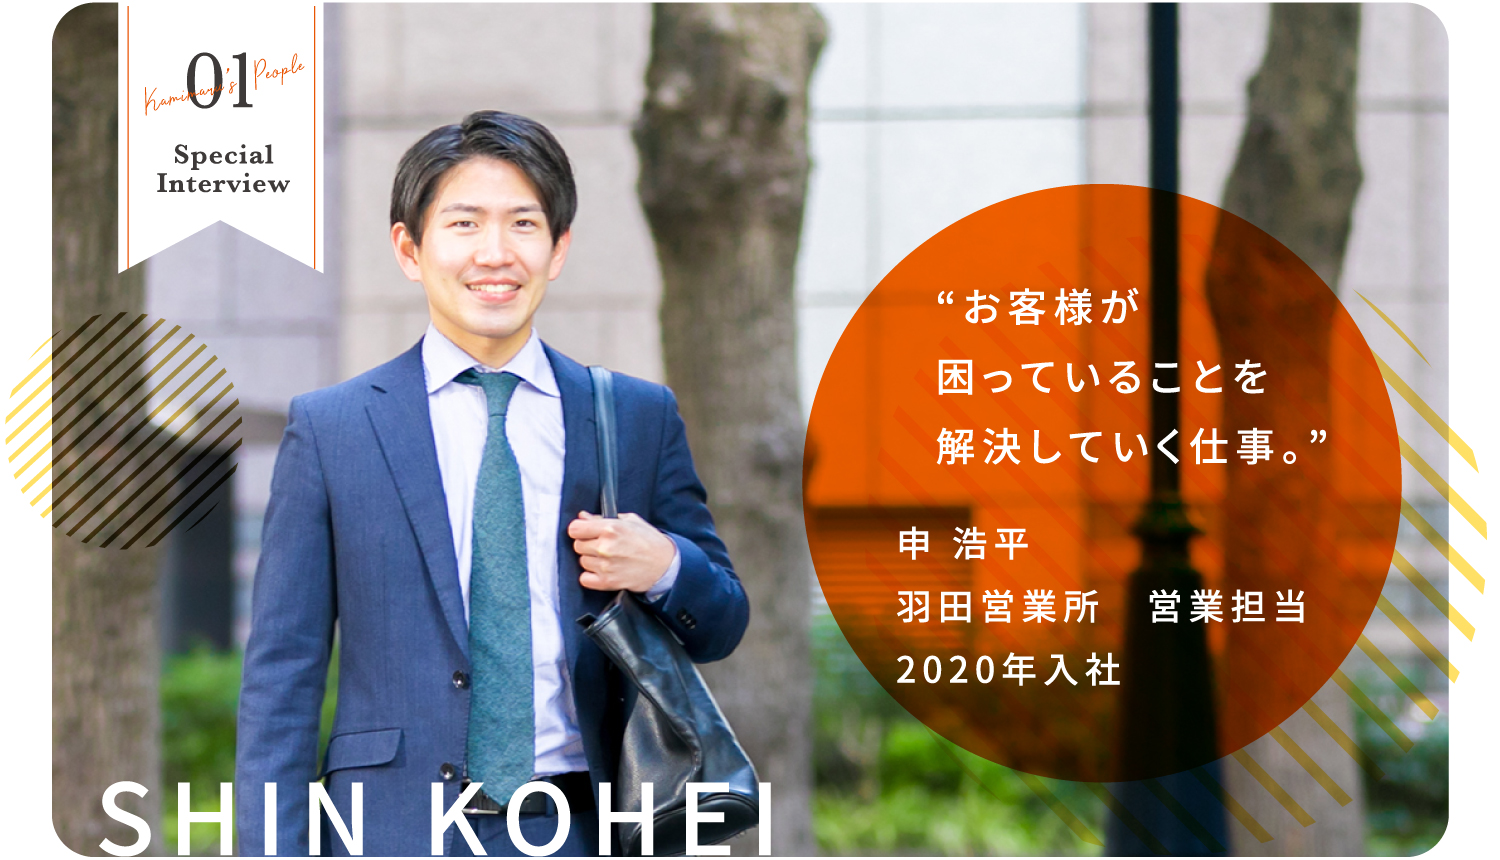 01 Kamimaru's People Special Interview SHIN KOHEI “お客様が困っていることを解決していく仕事。” 申 浩平 羽田営業所　営業担当 2020年入社